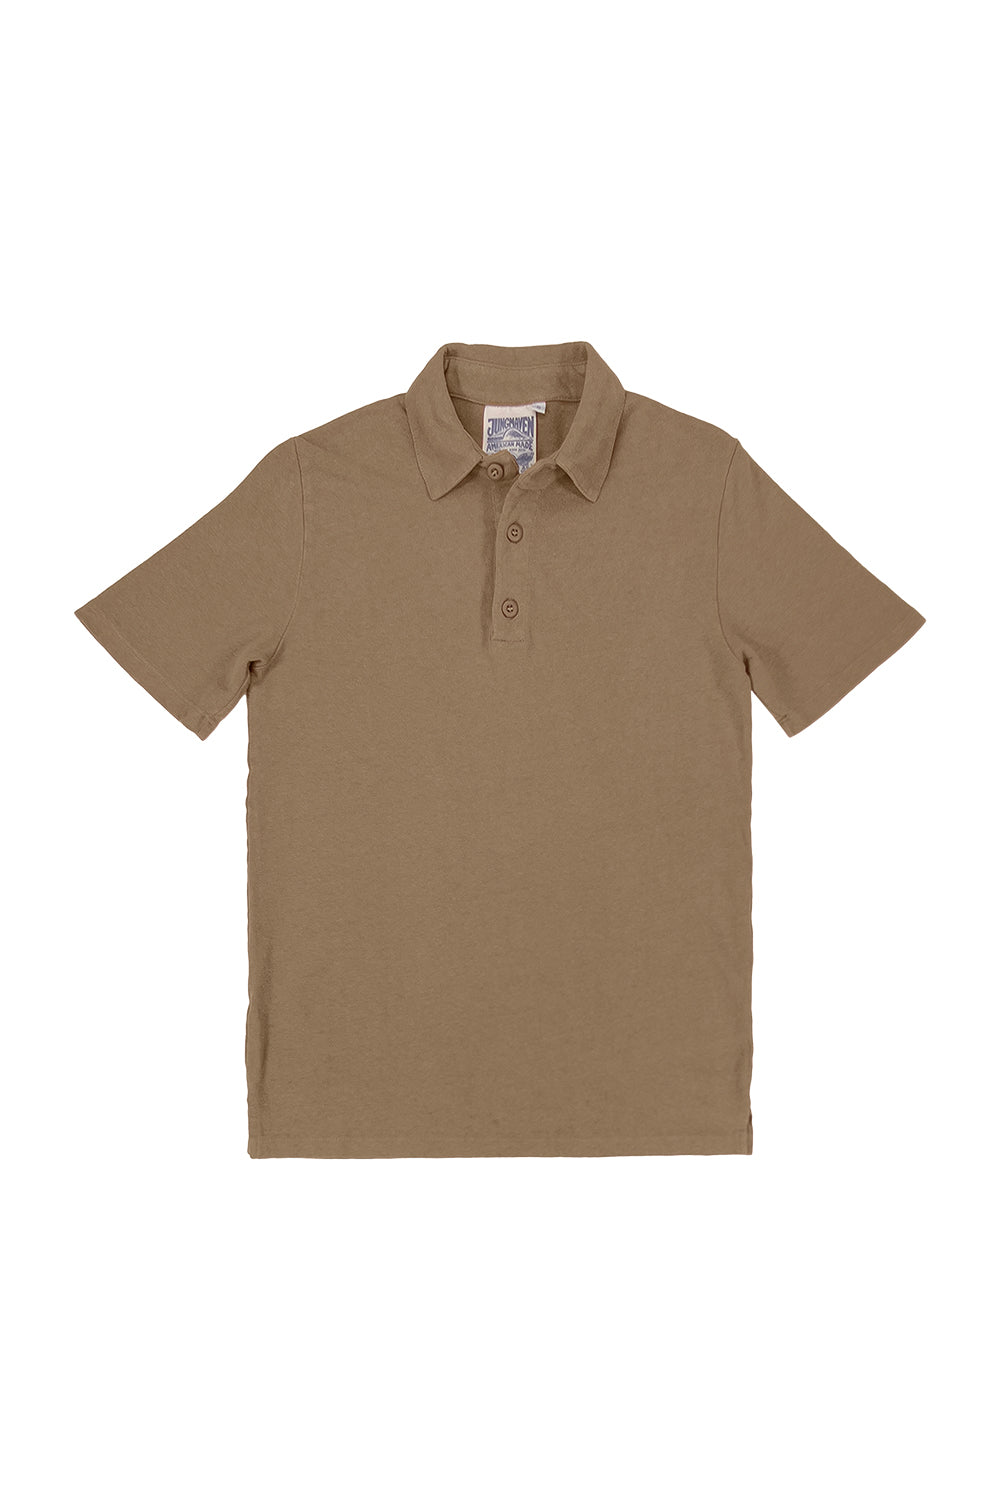 Preston Polo Shirt | Jungmaven Hemp Clothing & Accessories / Color: Coyote